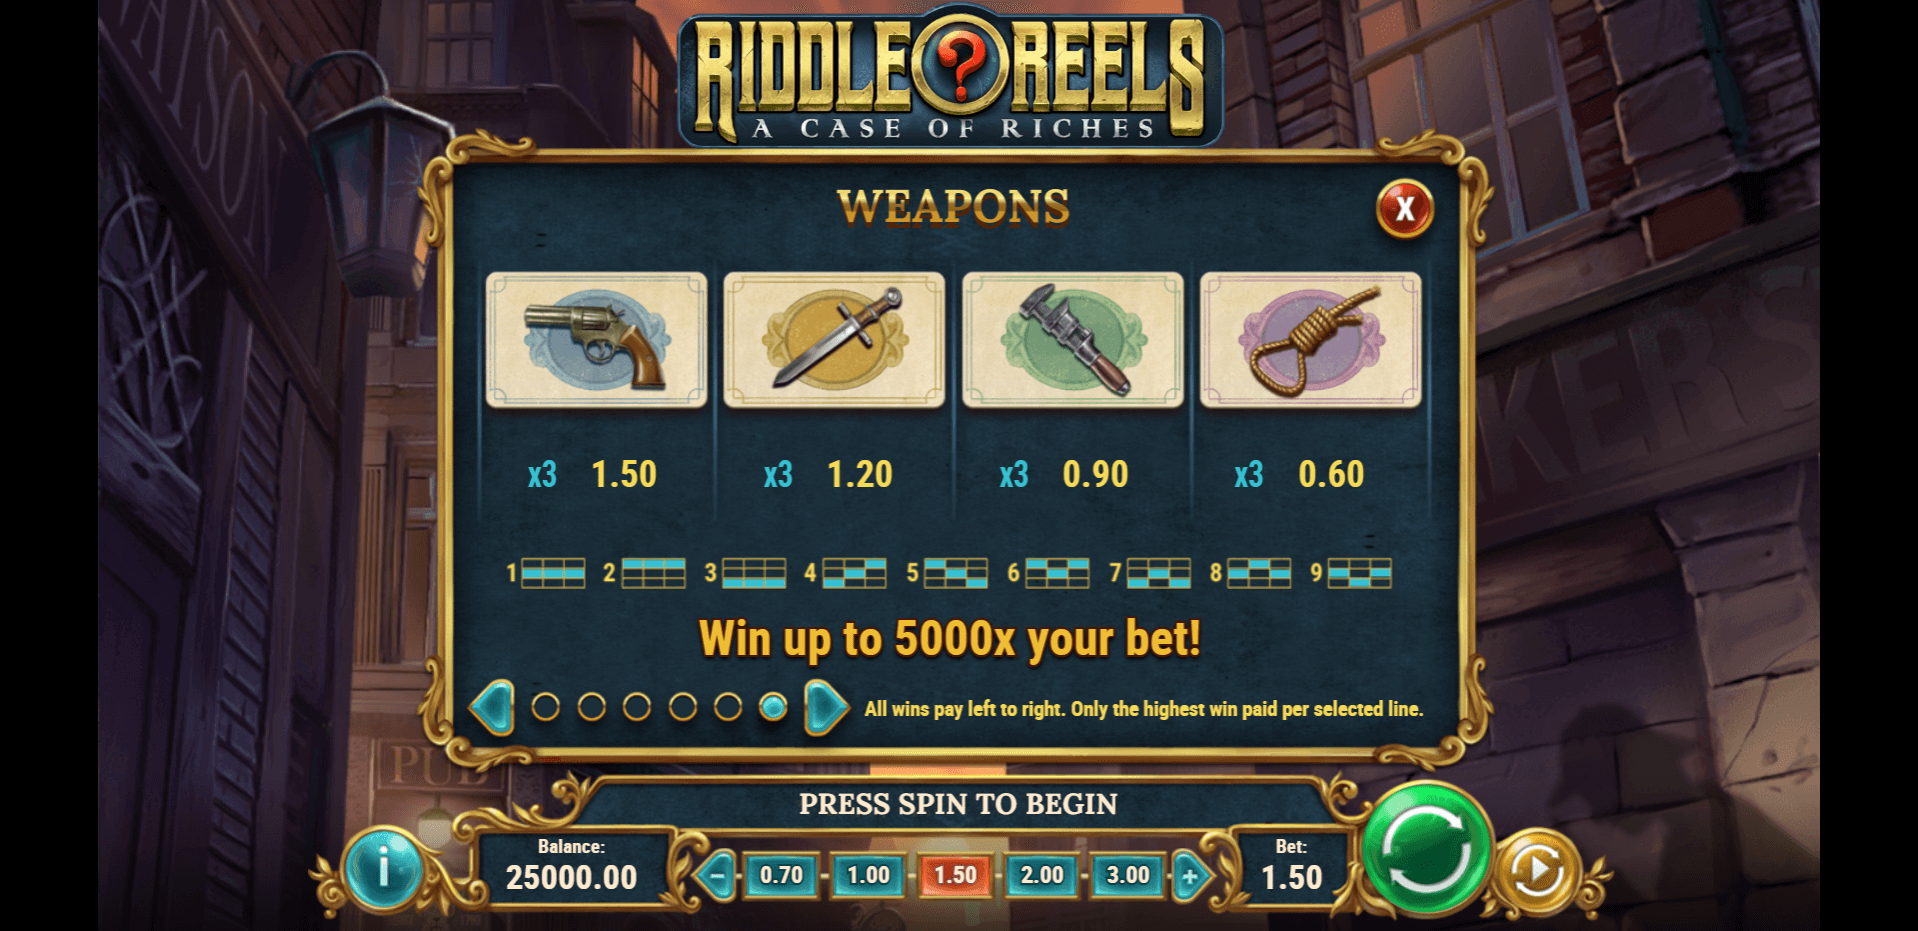 riddle reels slot machine detail image 5